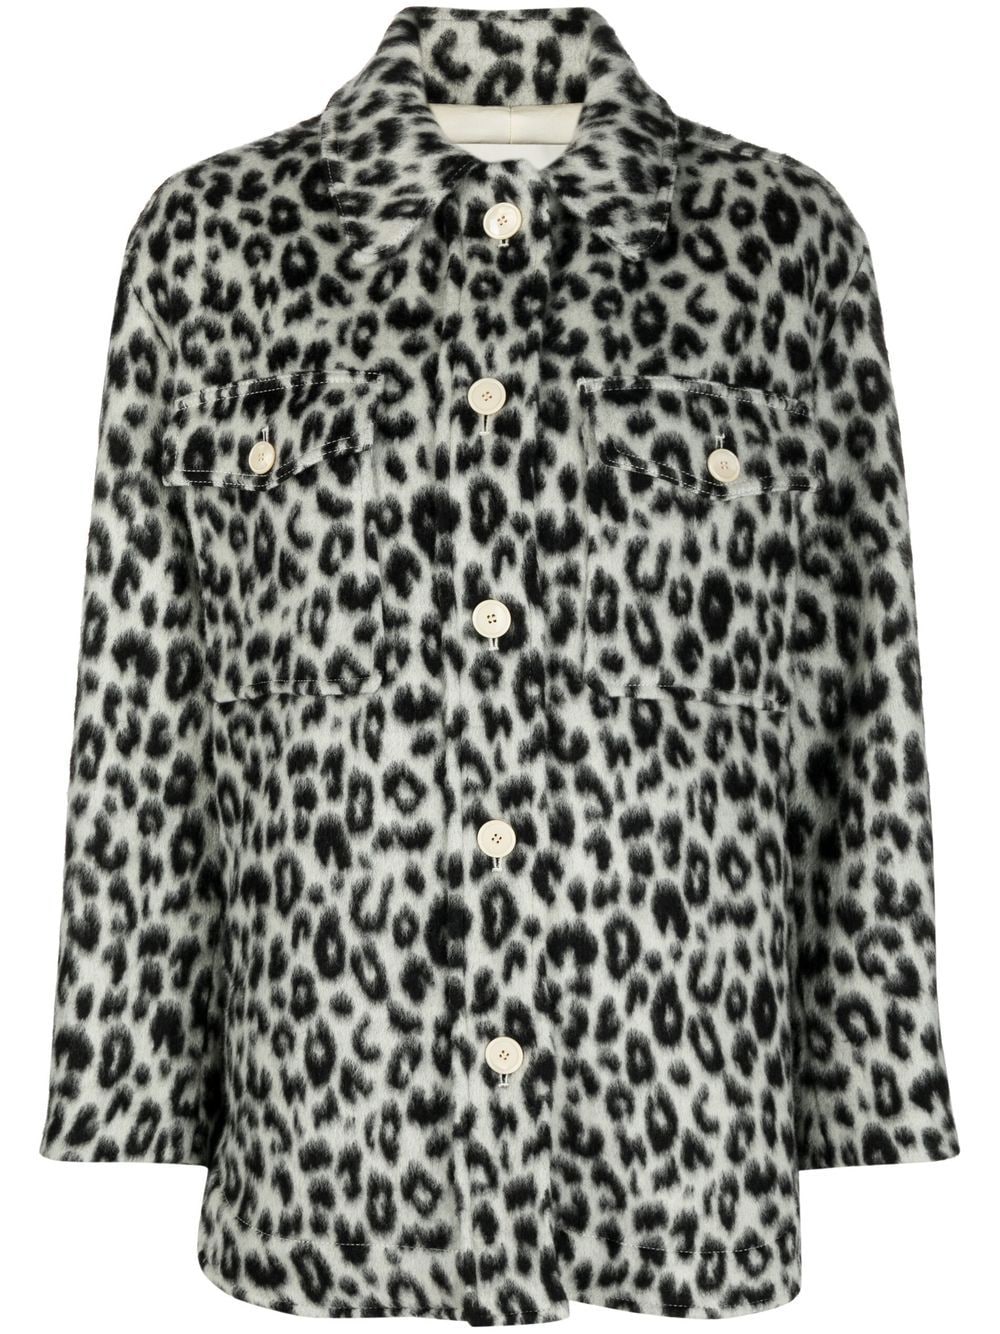 ISABEL MARANT leopard print shirt jacket - White von ISABEL MARANT